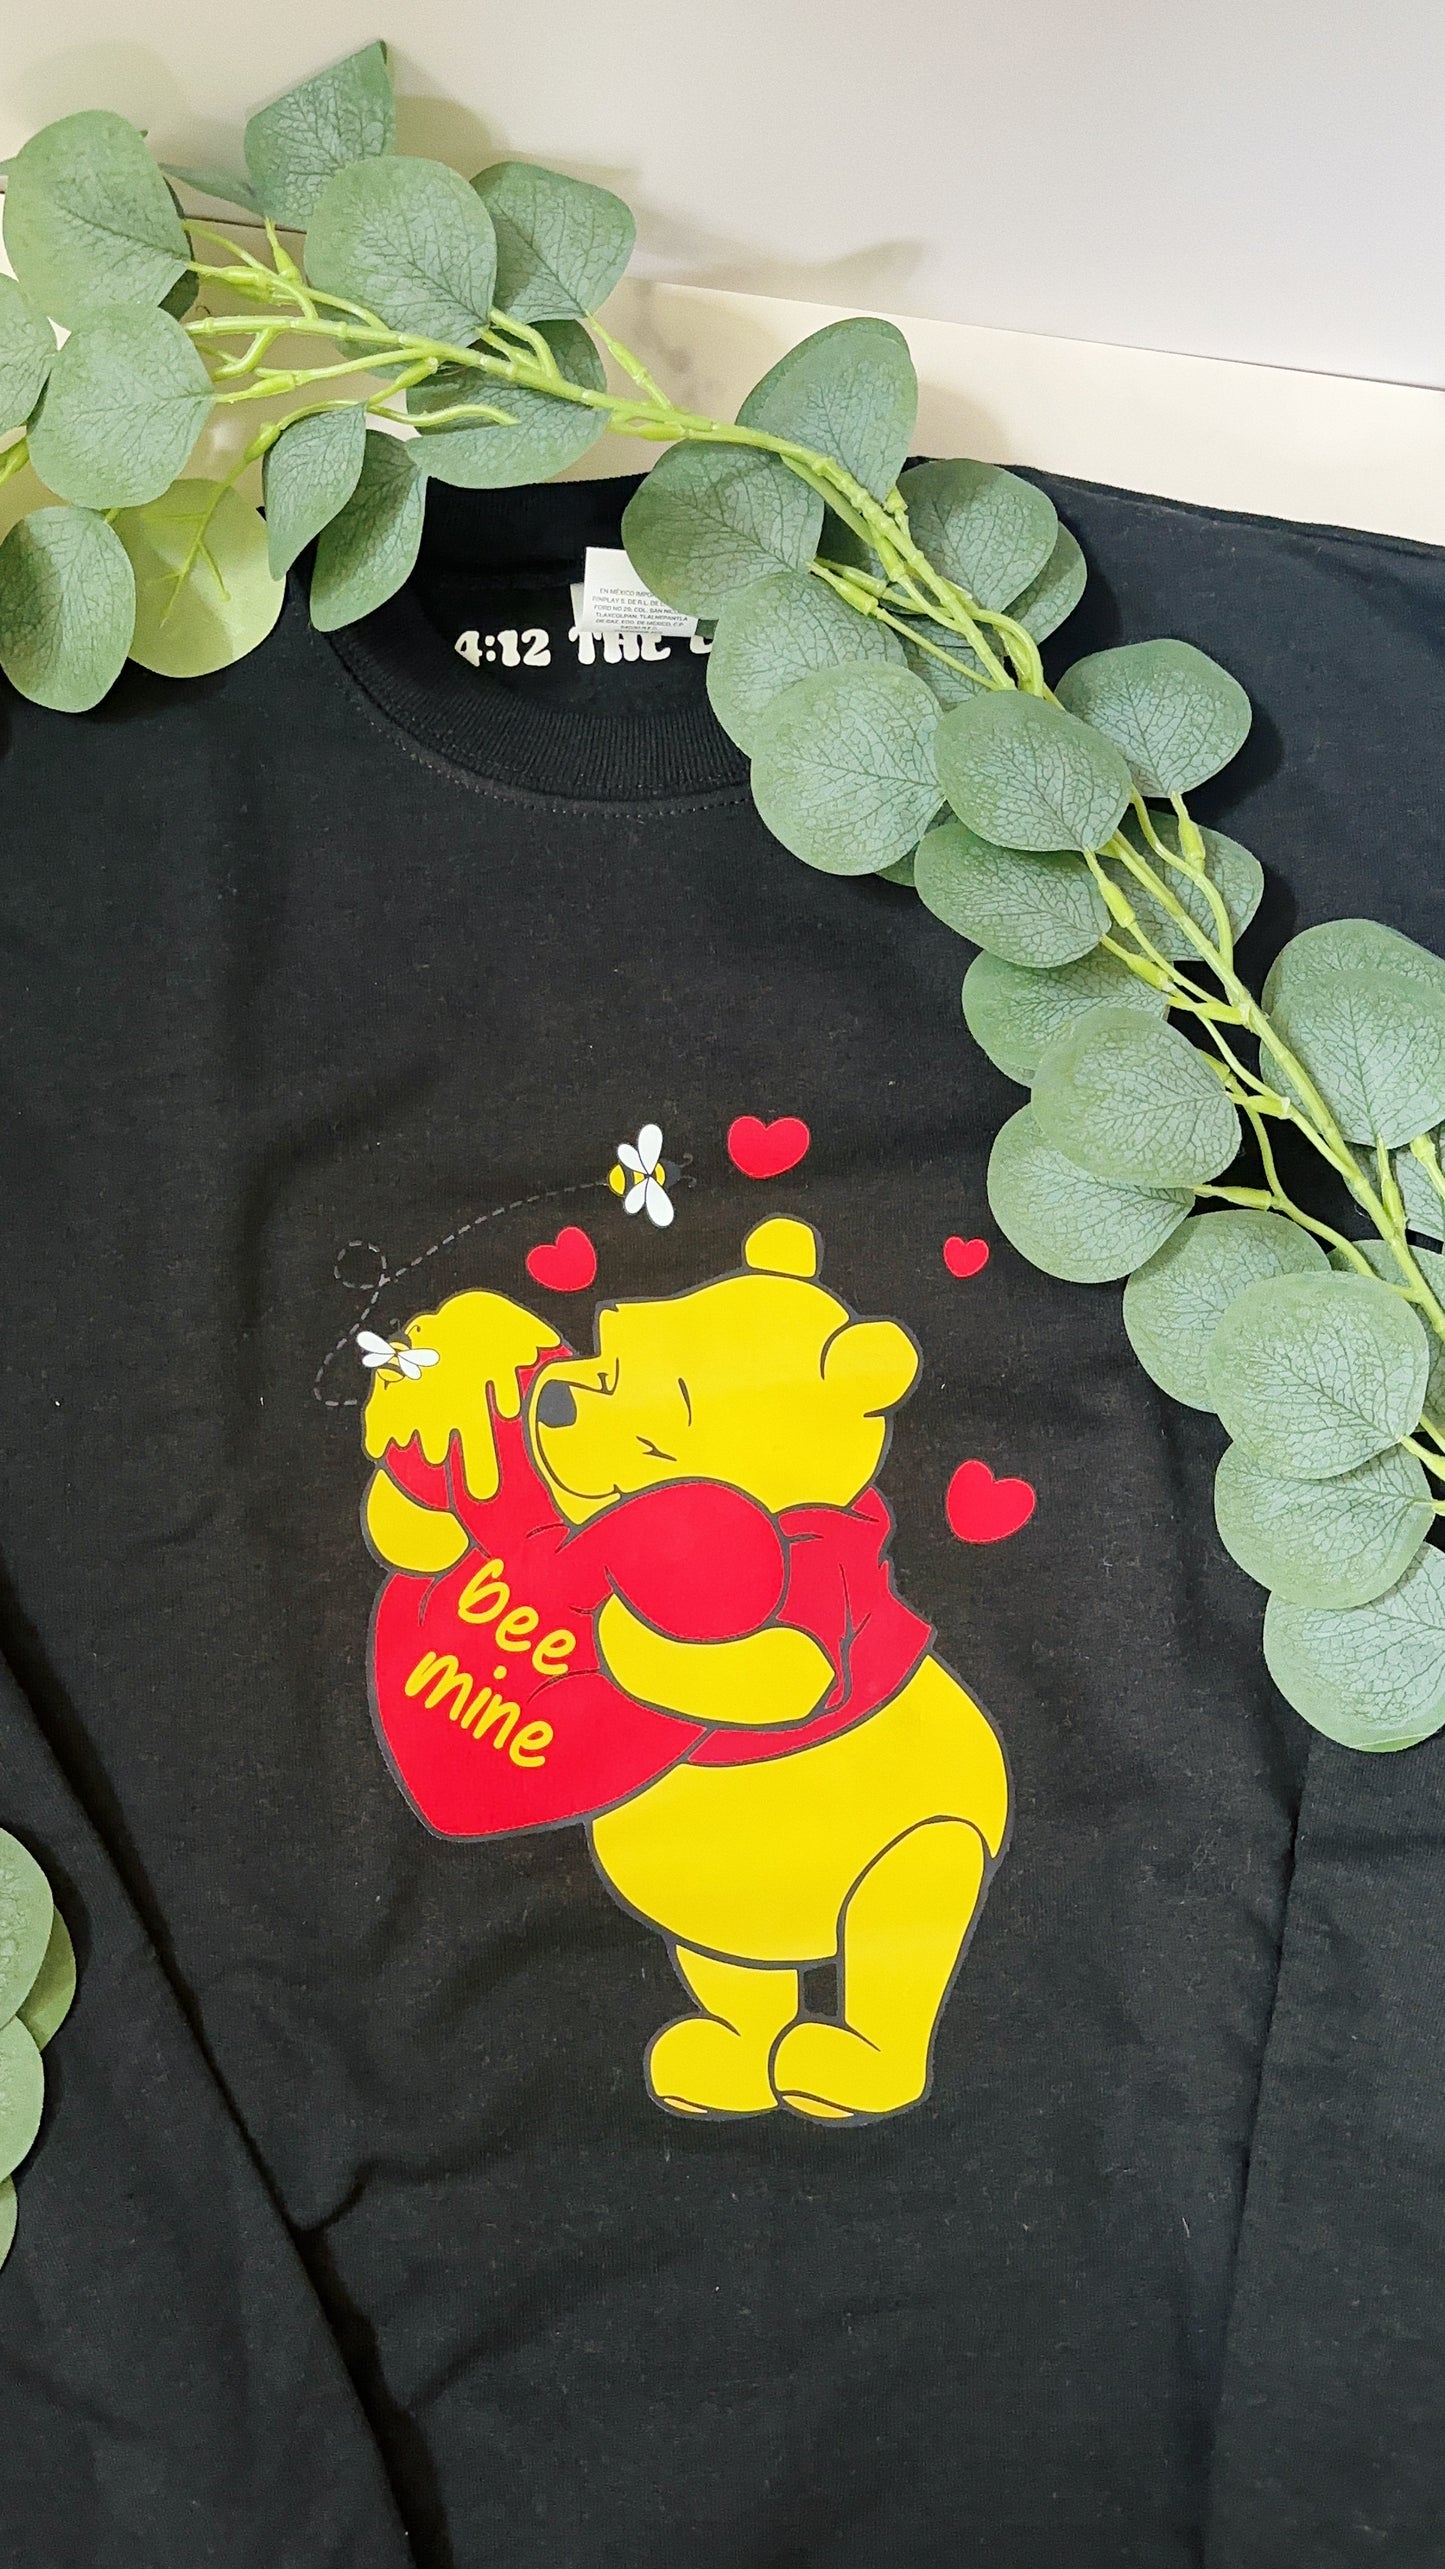 (RTS) "Bee Mine" Pooh Bear Valentines